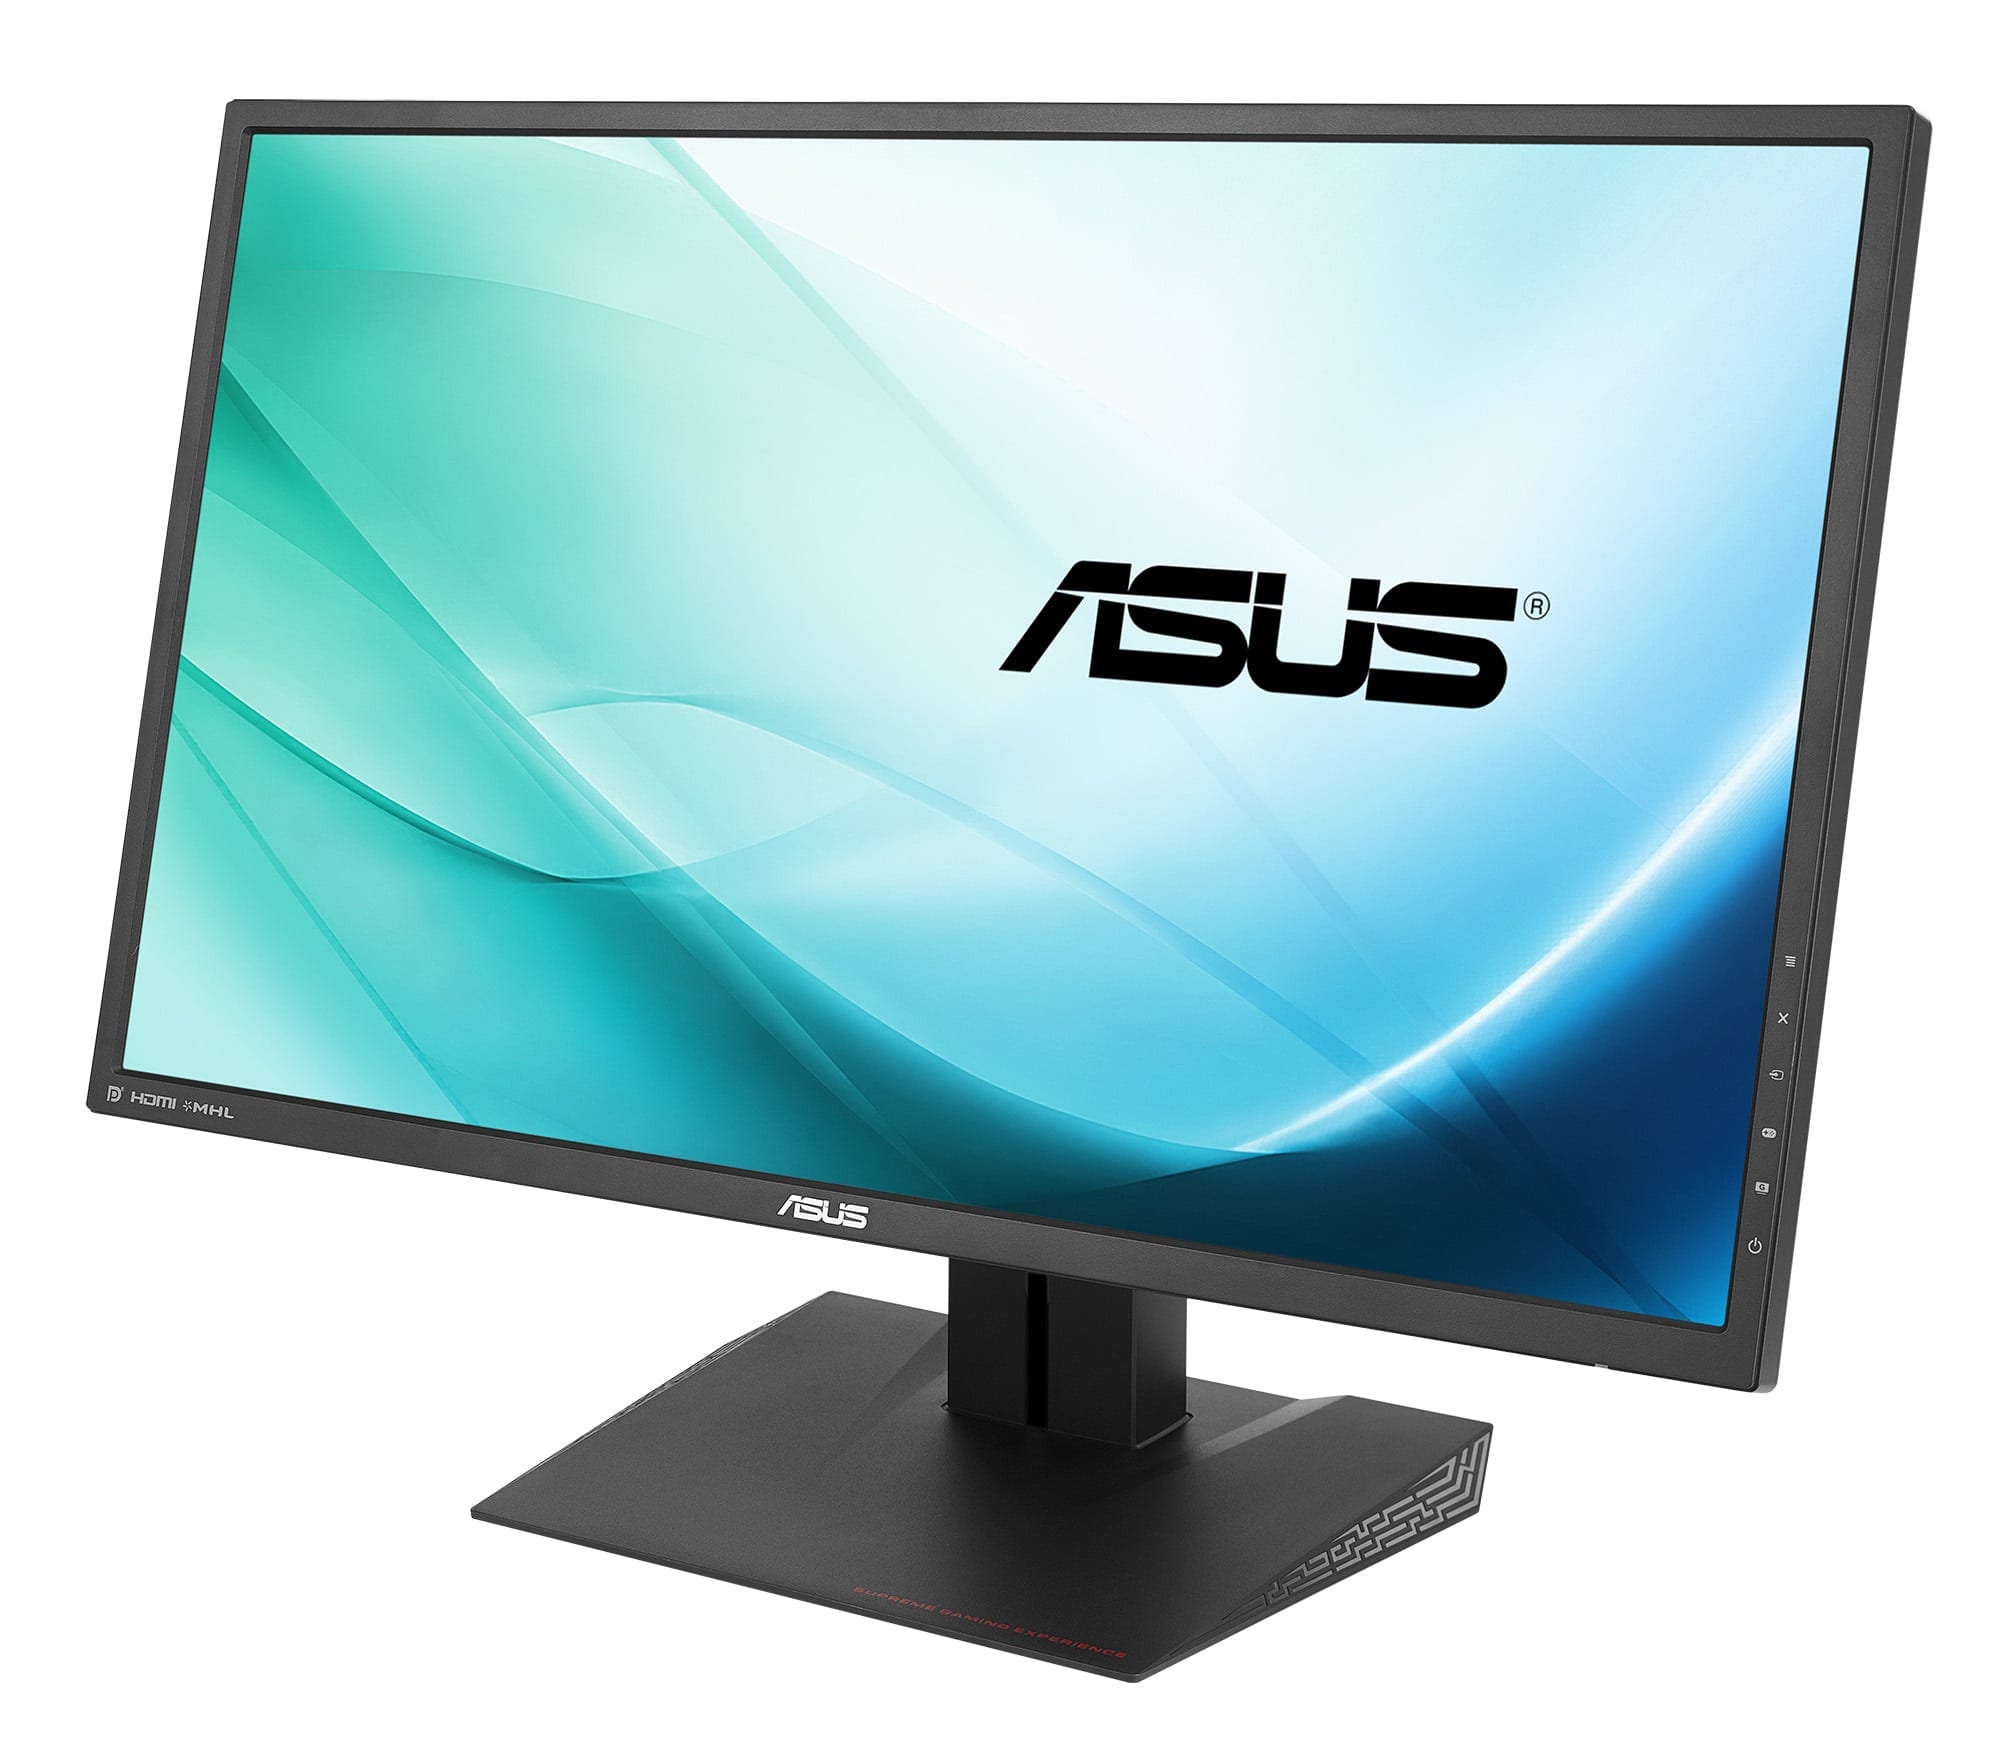 ASUS introduce comercial noul monitor de gaming MG279Q